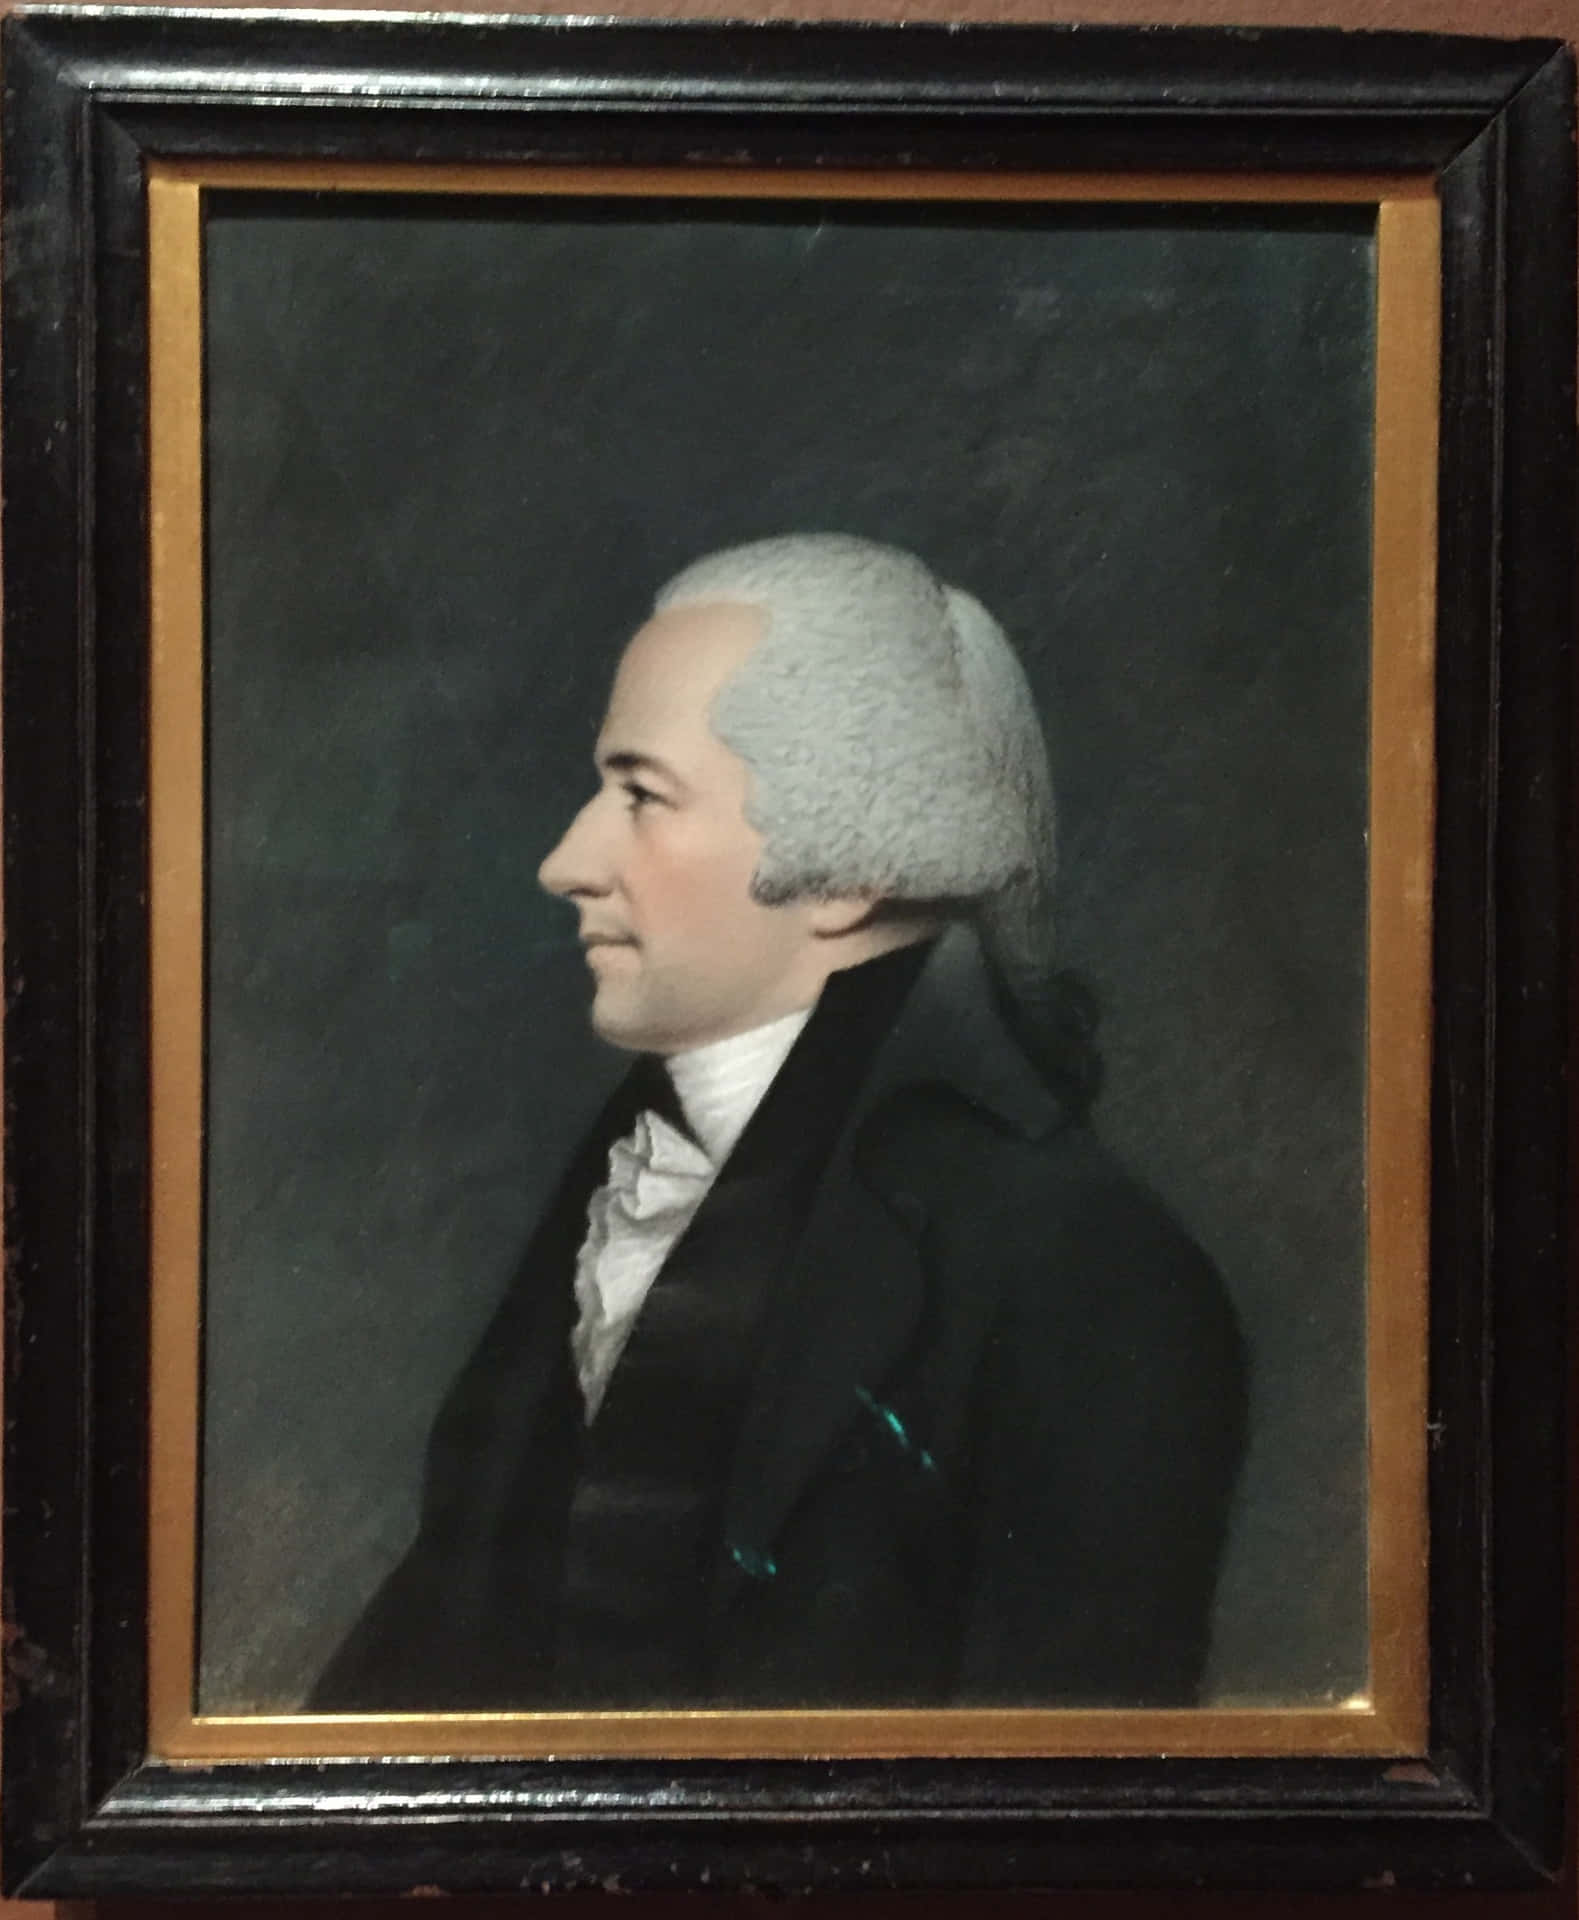 Alexander Hamilton, Founding Father&1st U.S. Secretary of the Treasury